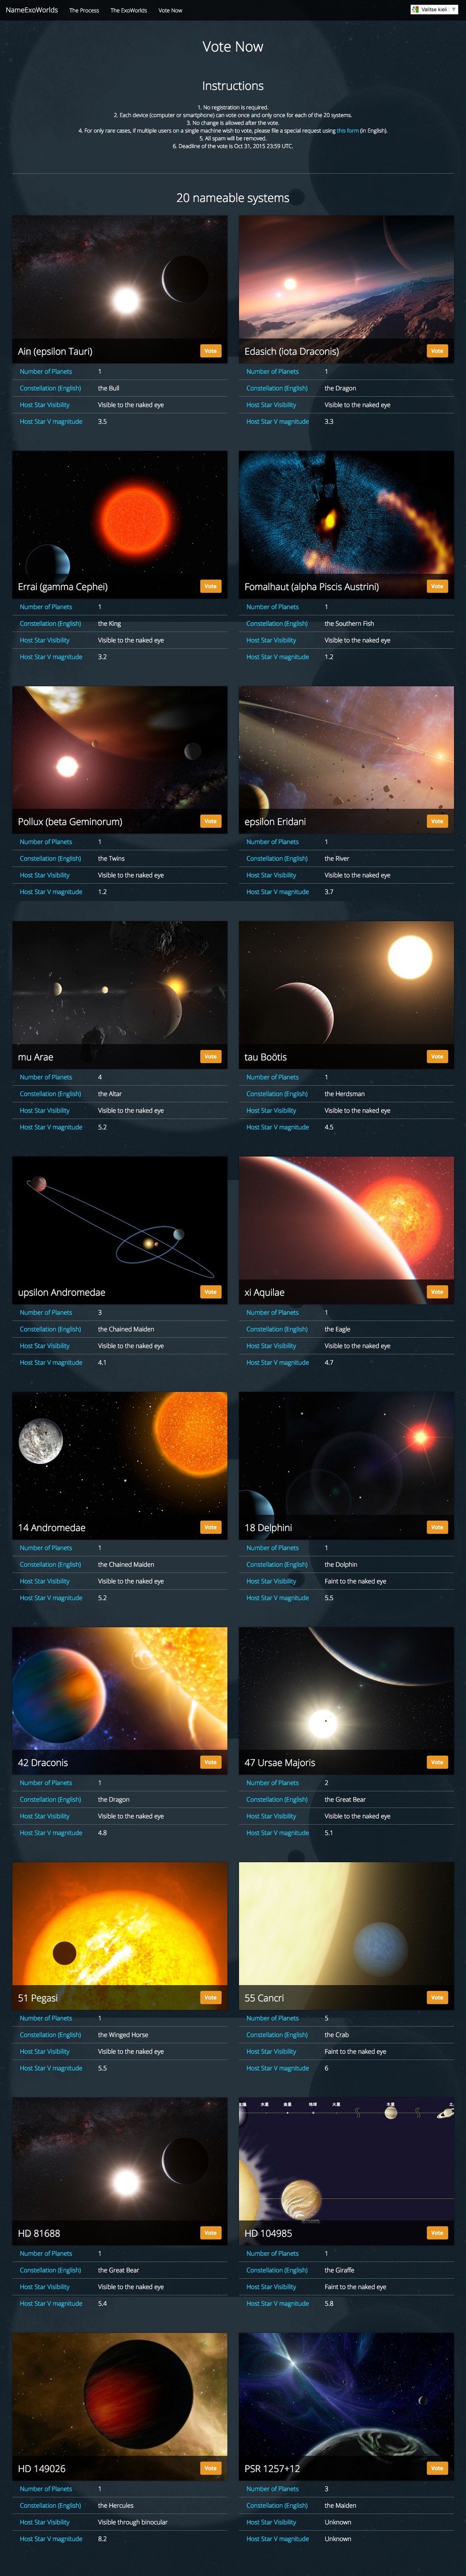 International Astronomical Union website screenshot for desktop version 2 of 4